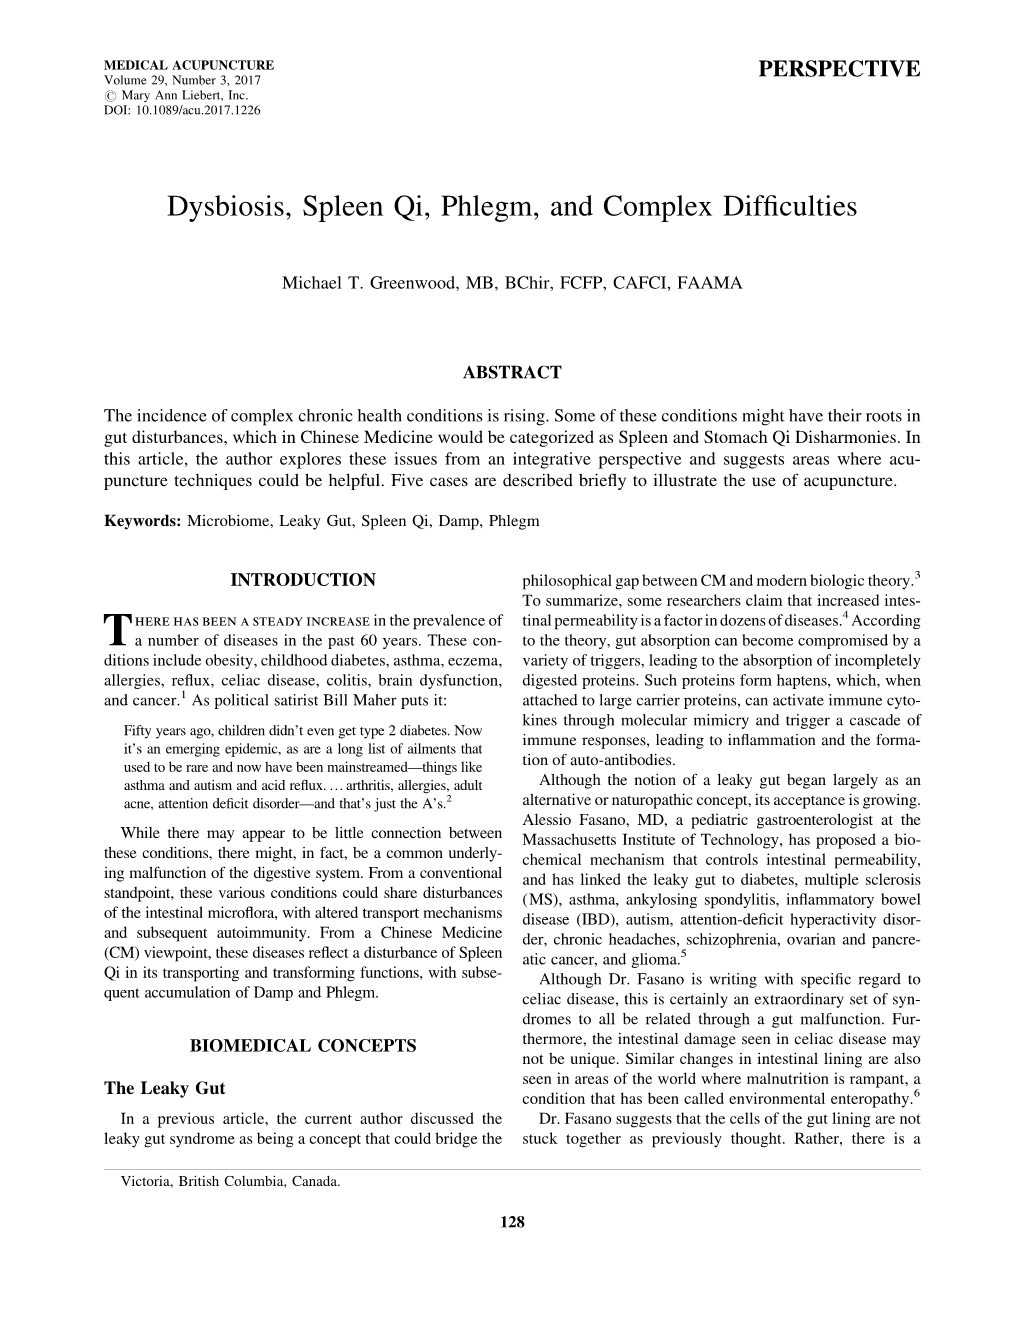 Dysbiosis, Spleen Qi, Phlegm, and Complex Difficulties